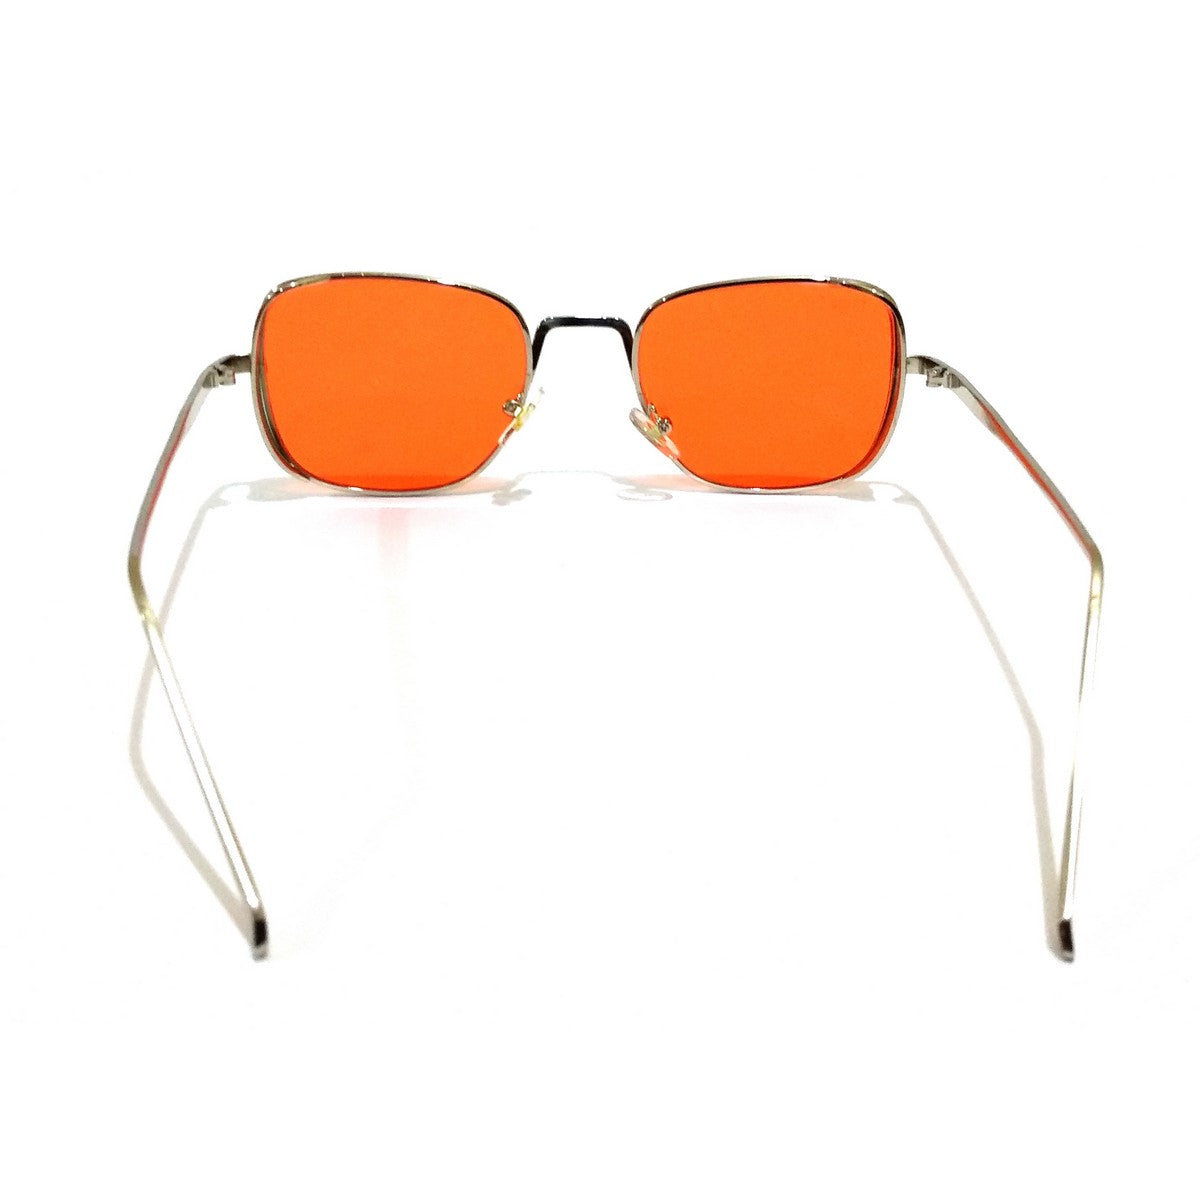 Kabir Singh Style Silver Sunglasses Orange Lens